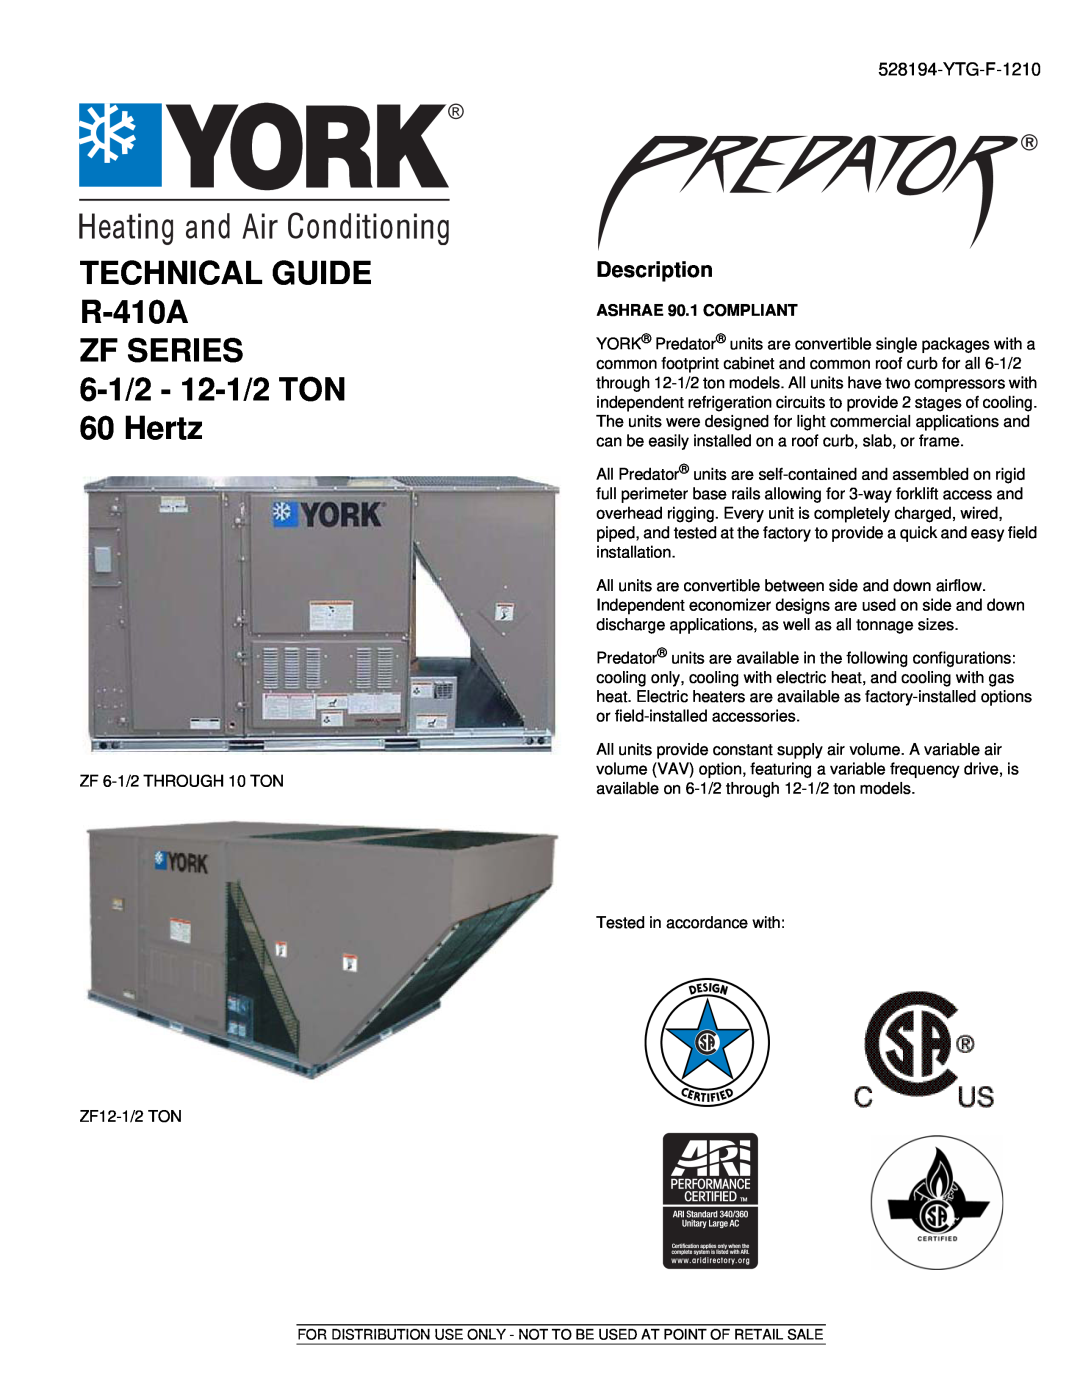 York manual ZJ/ZR Shown, Description, YTG-G-0708, TECHNICAL GUIDE R-410A, ZJ/ZR/ZF SERIES 15 - 25 TON 60 Hertz 